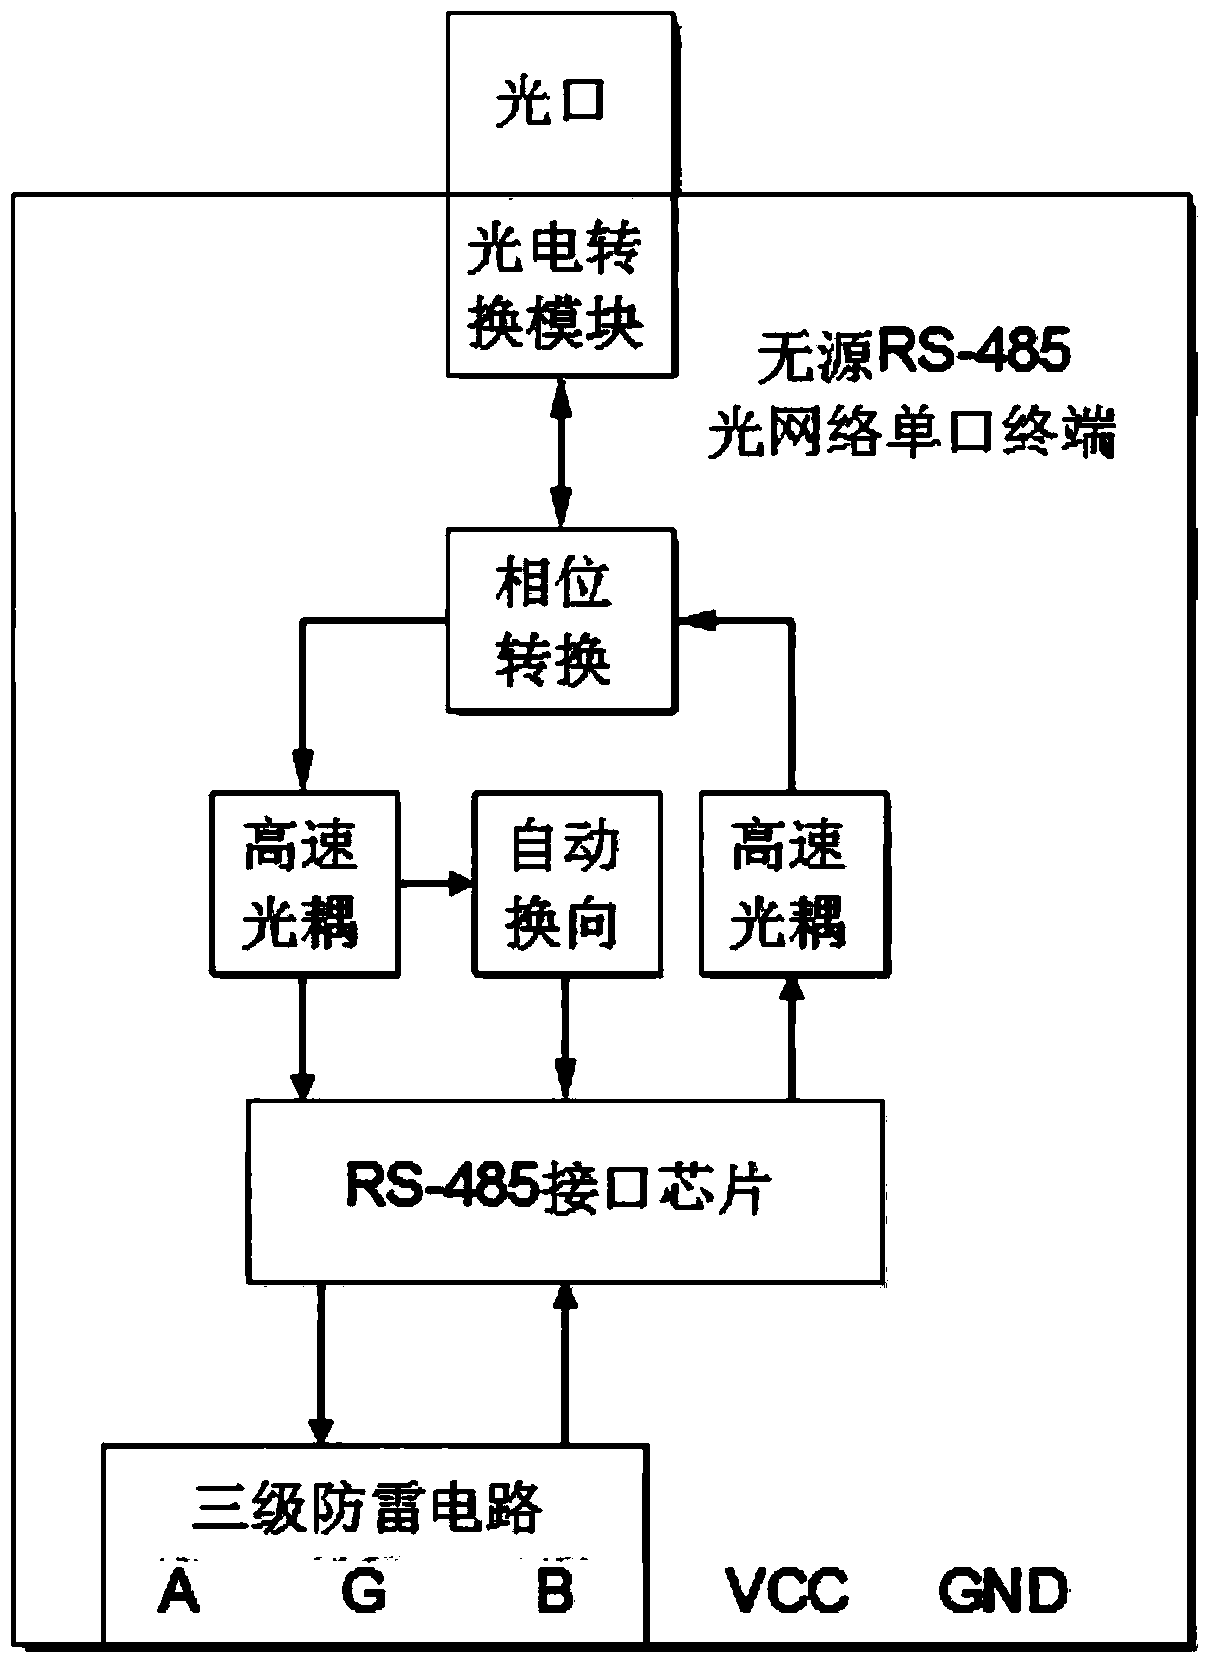 A kind of passive light-splitting rs-485 optical fiber bus communication method